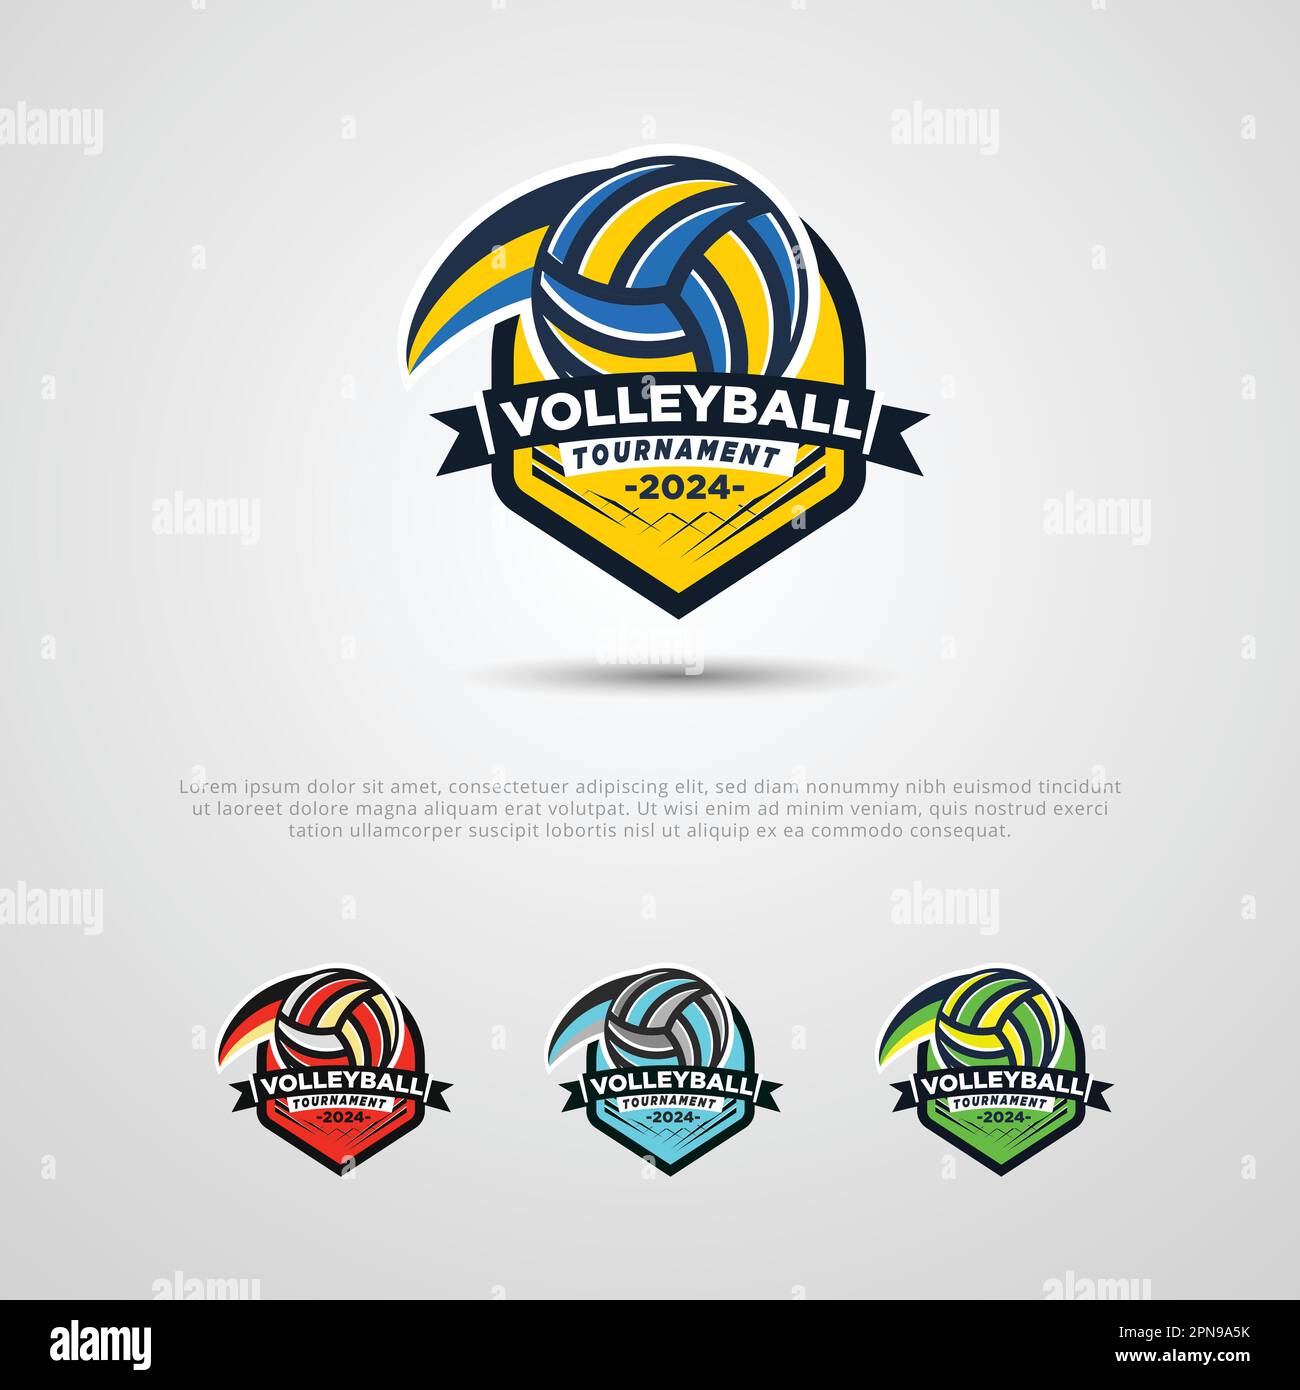 Volleyball Tournament Logo Design Template Stock Vector